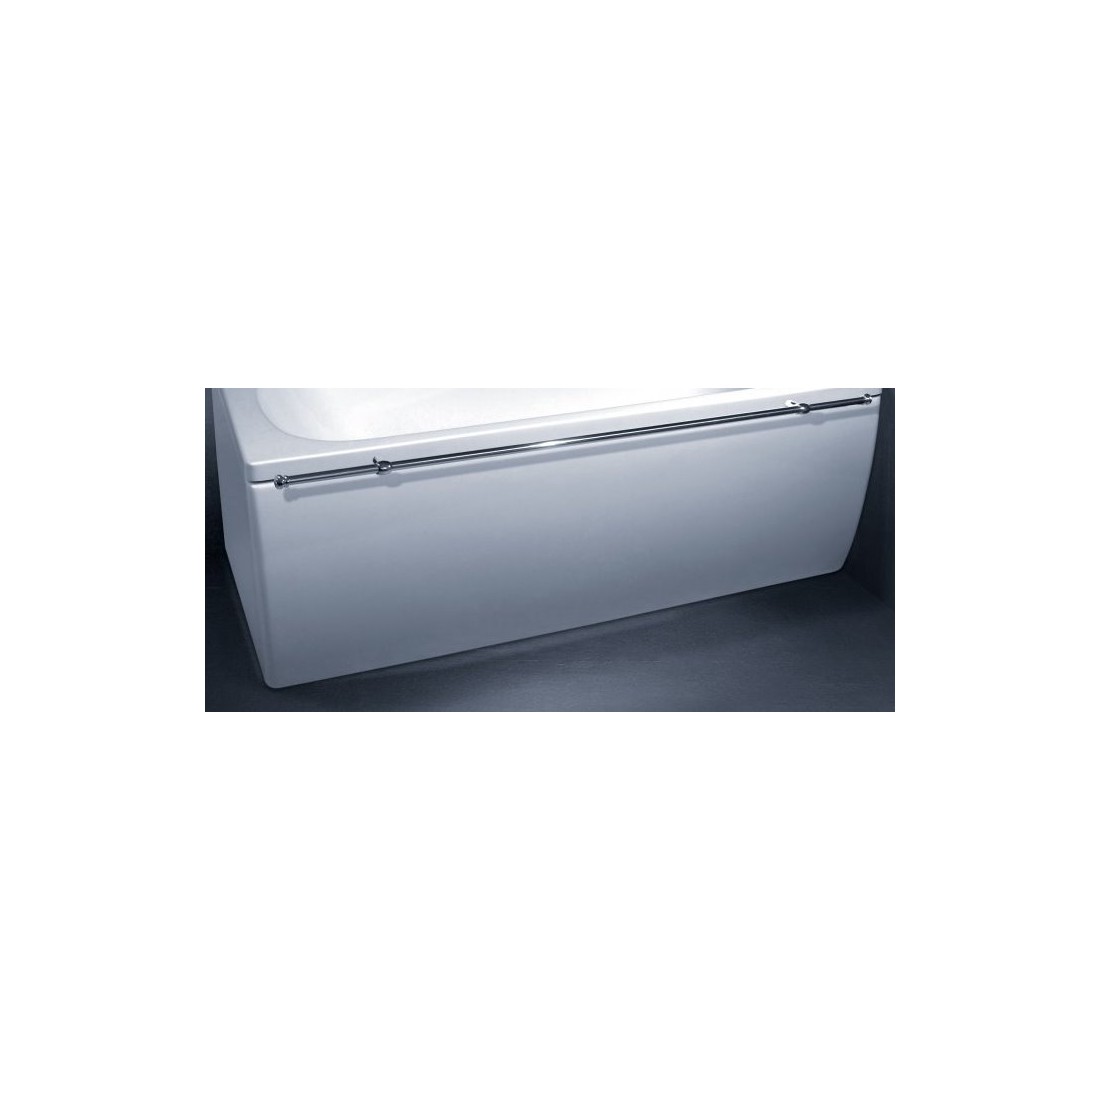 Apdaila voniai Vispool Classica balta, 150, L formos kairės pusės